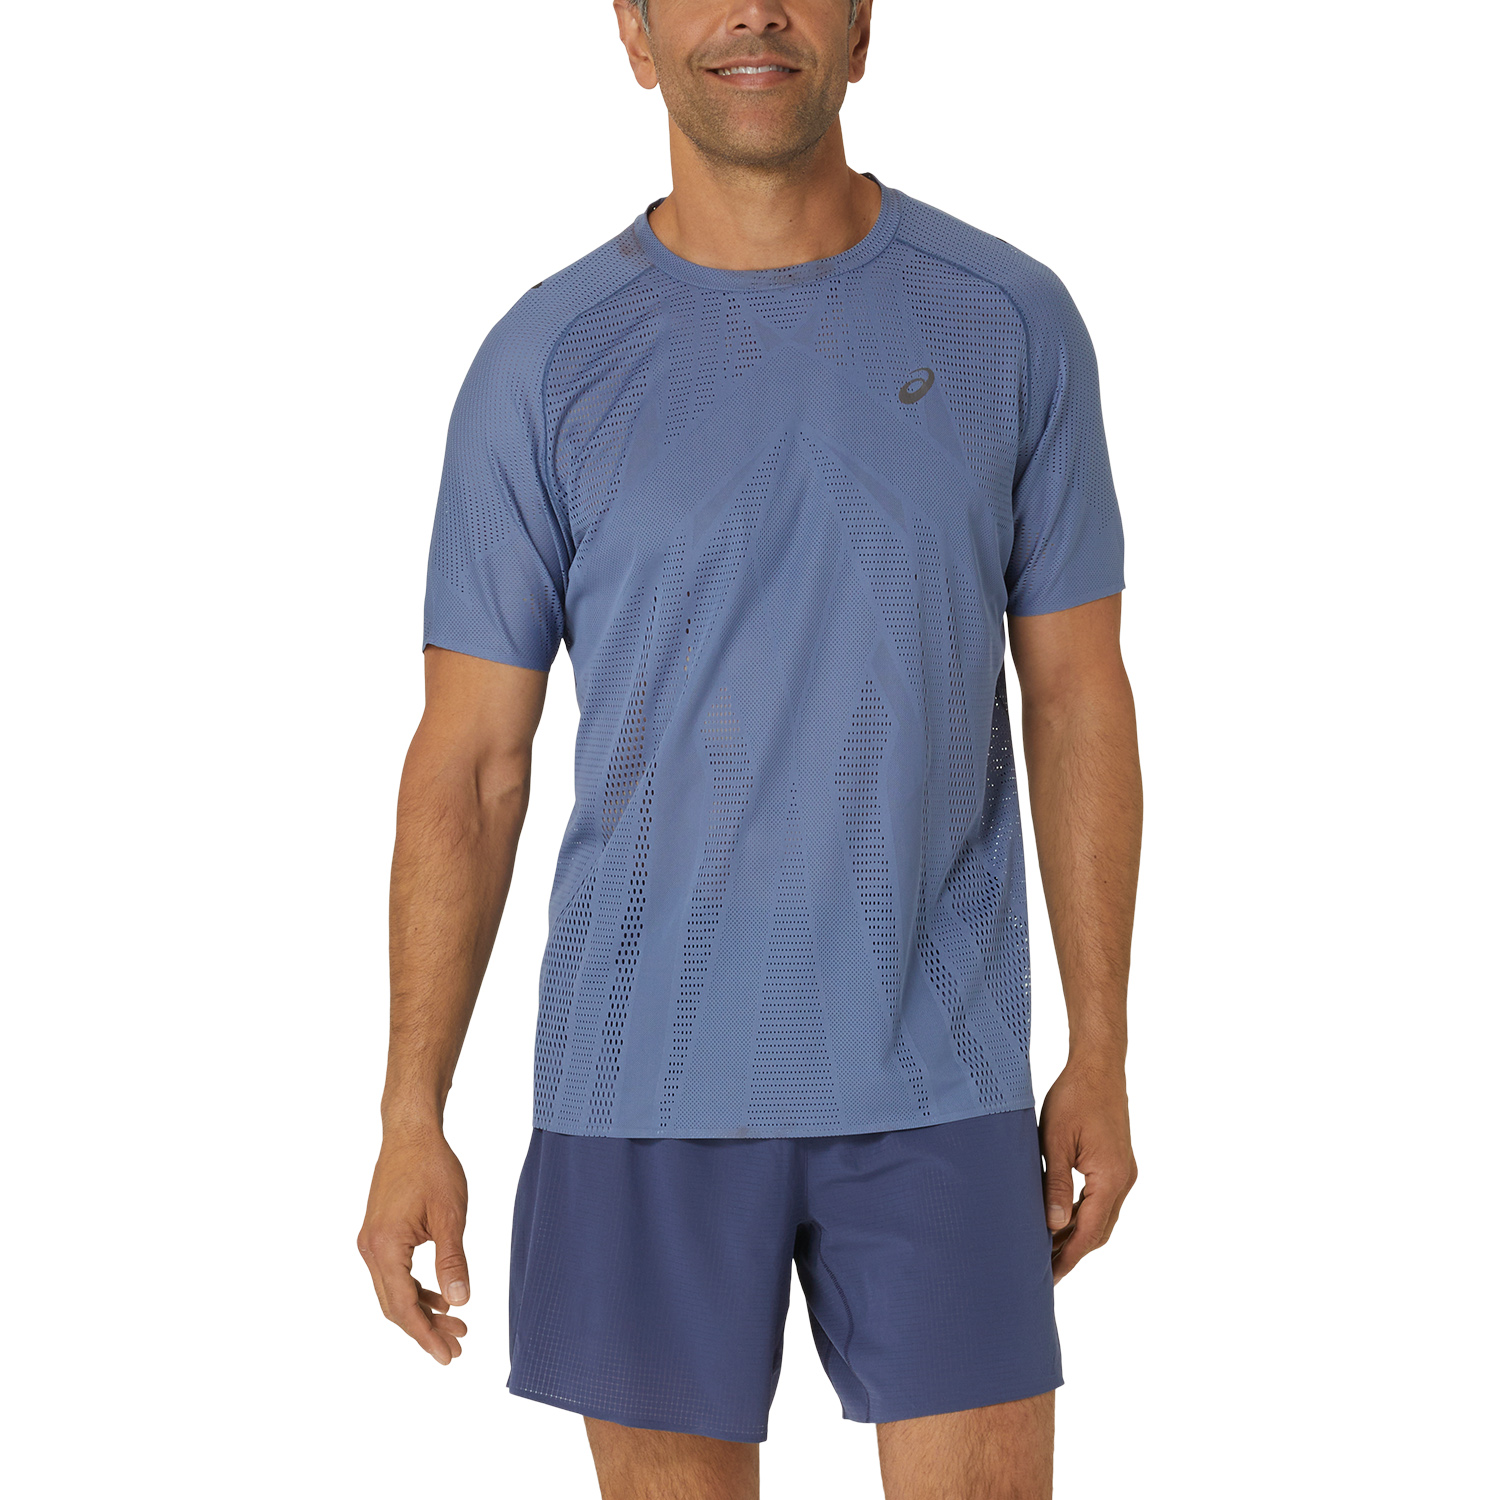 Asics Meta Run T-Shirt - Demin Blue